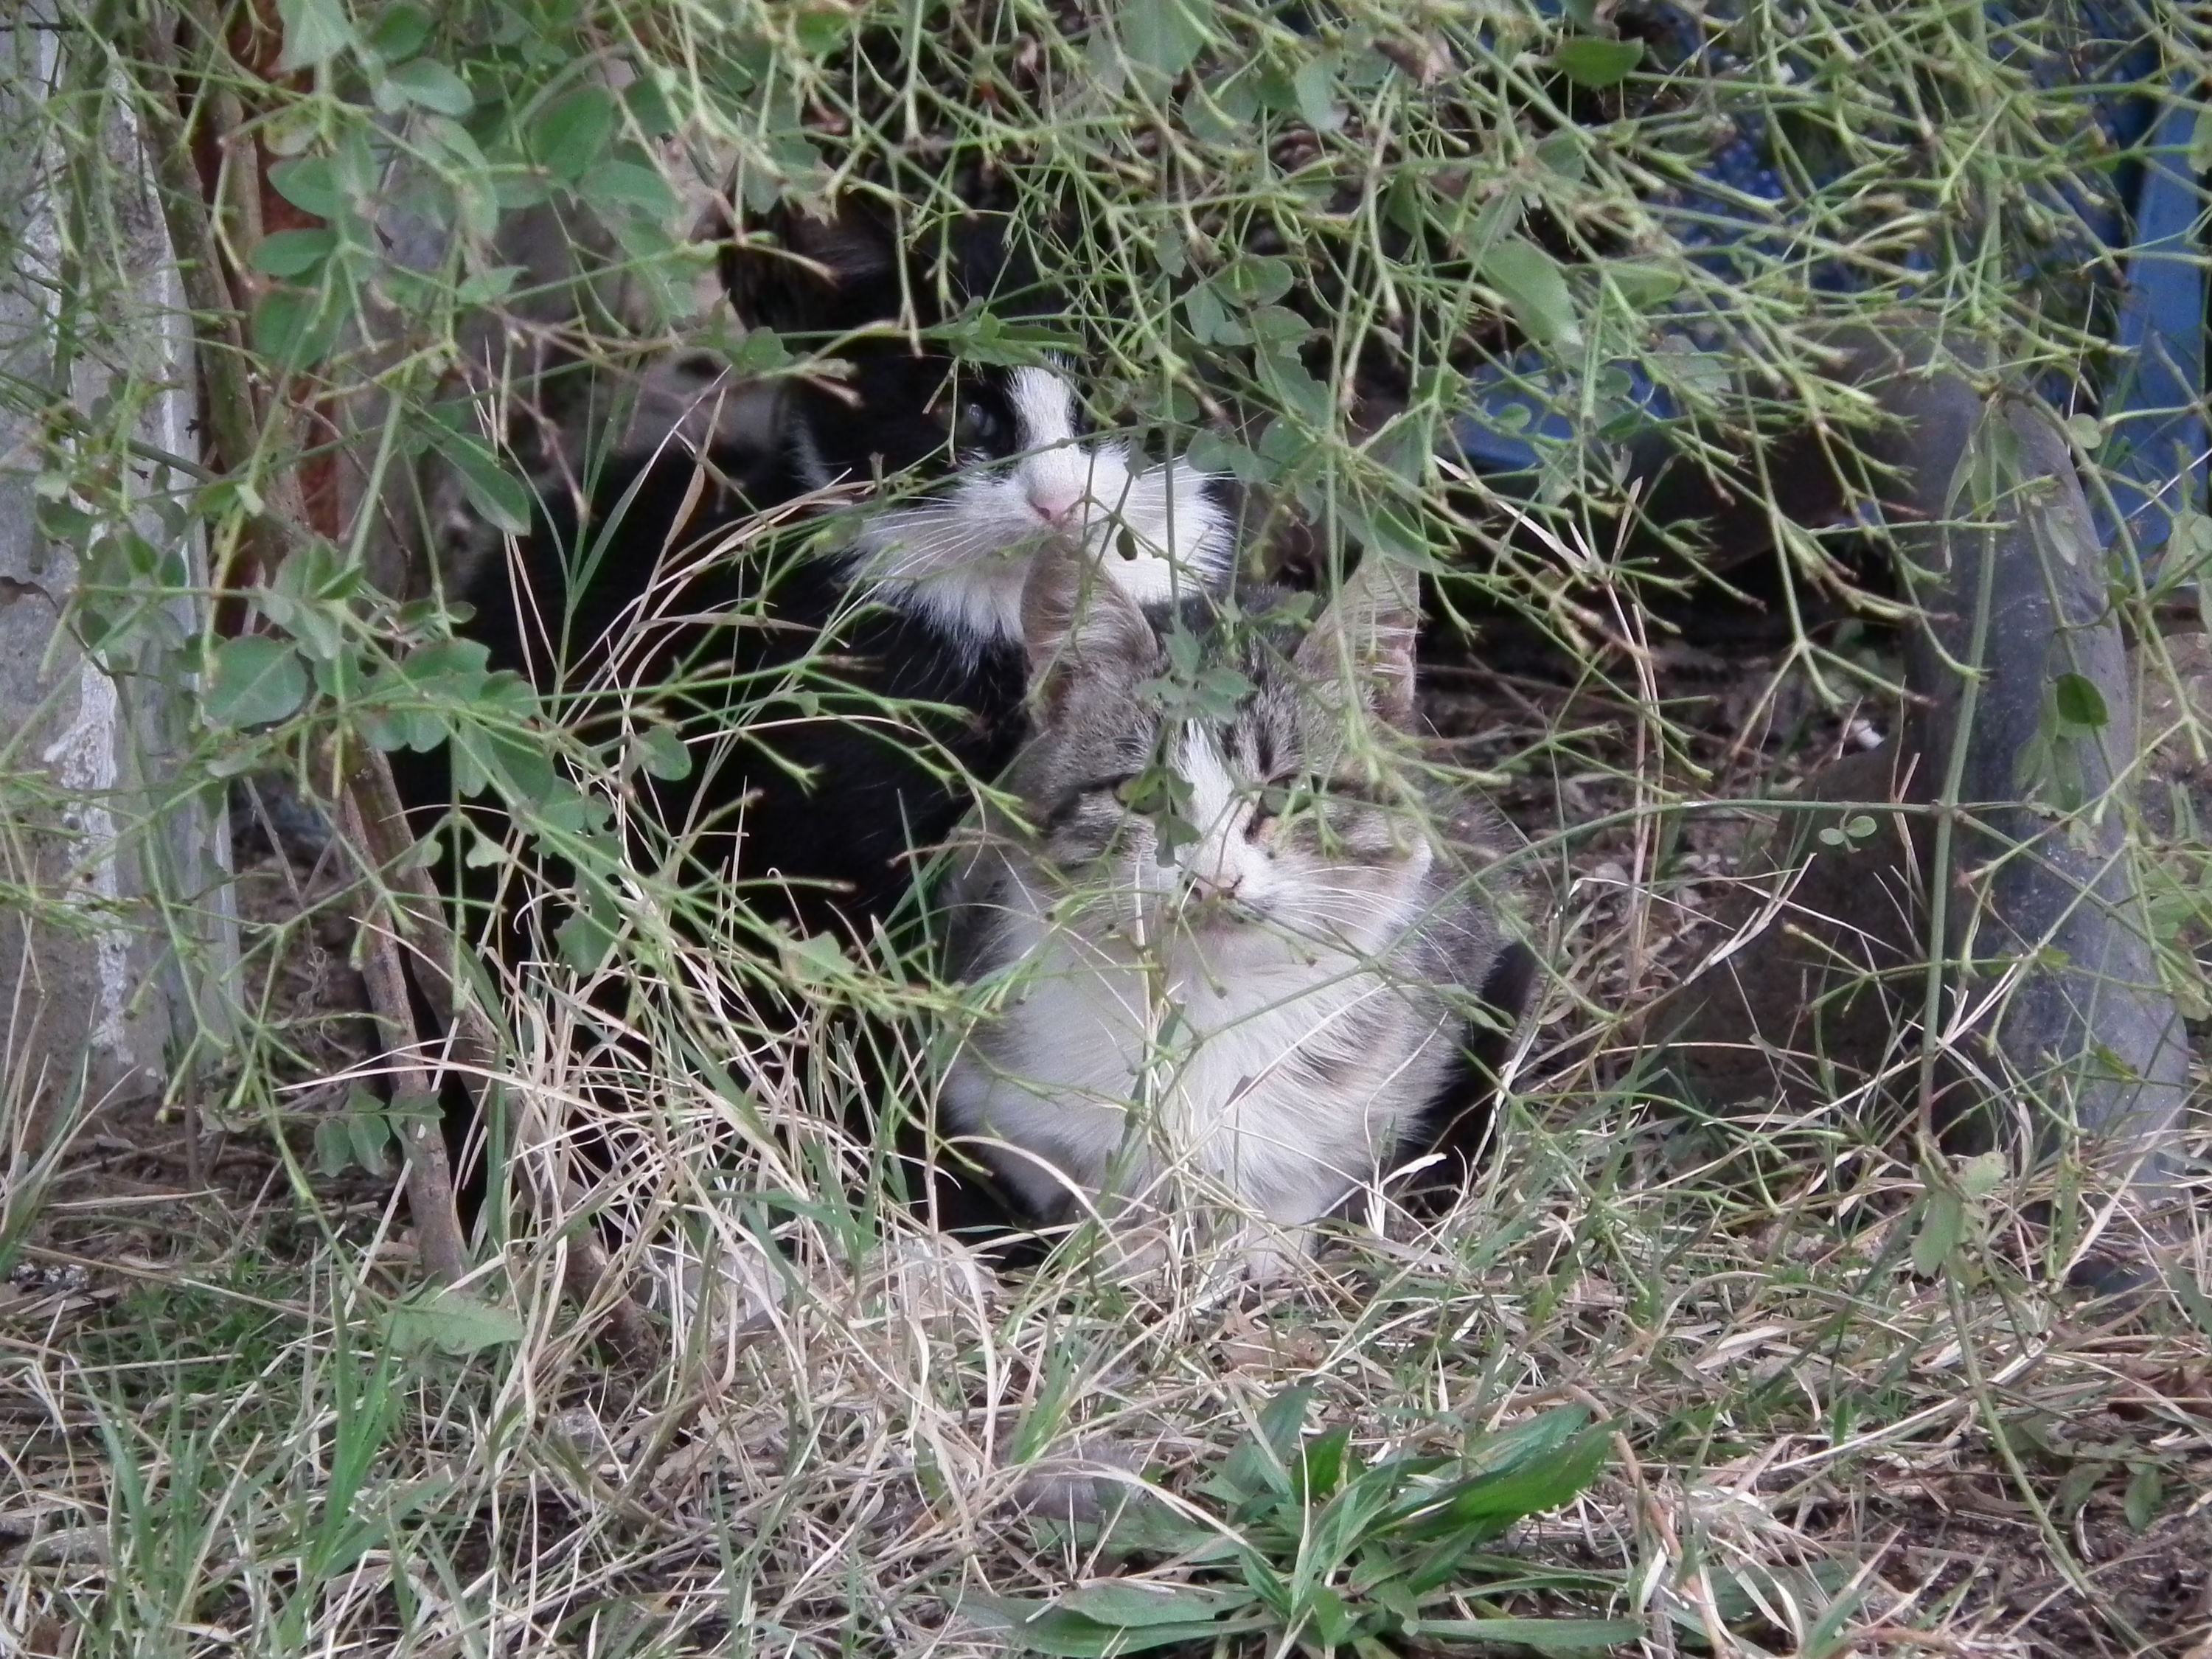 Kittens in hiding.